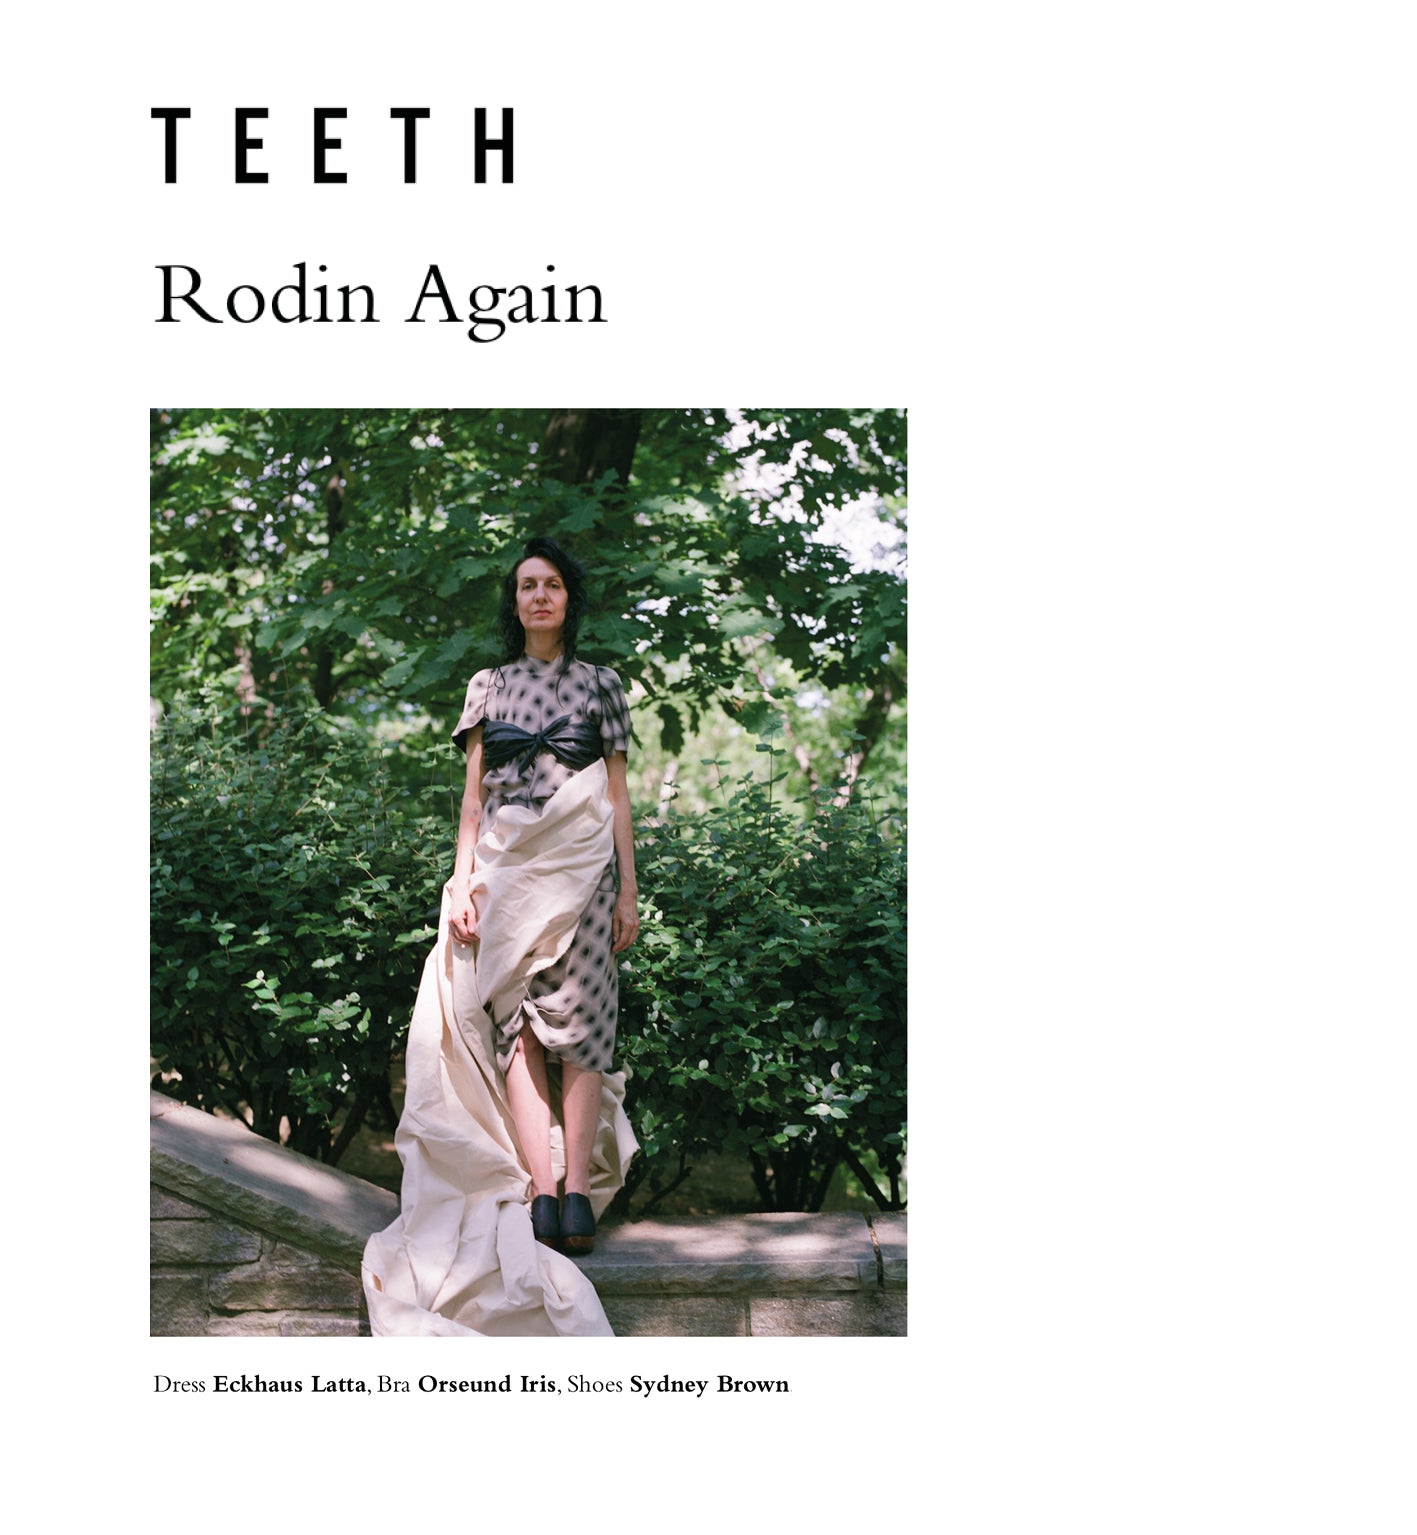 Rodin Again - Teeth Magazine features Sydney Brown